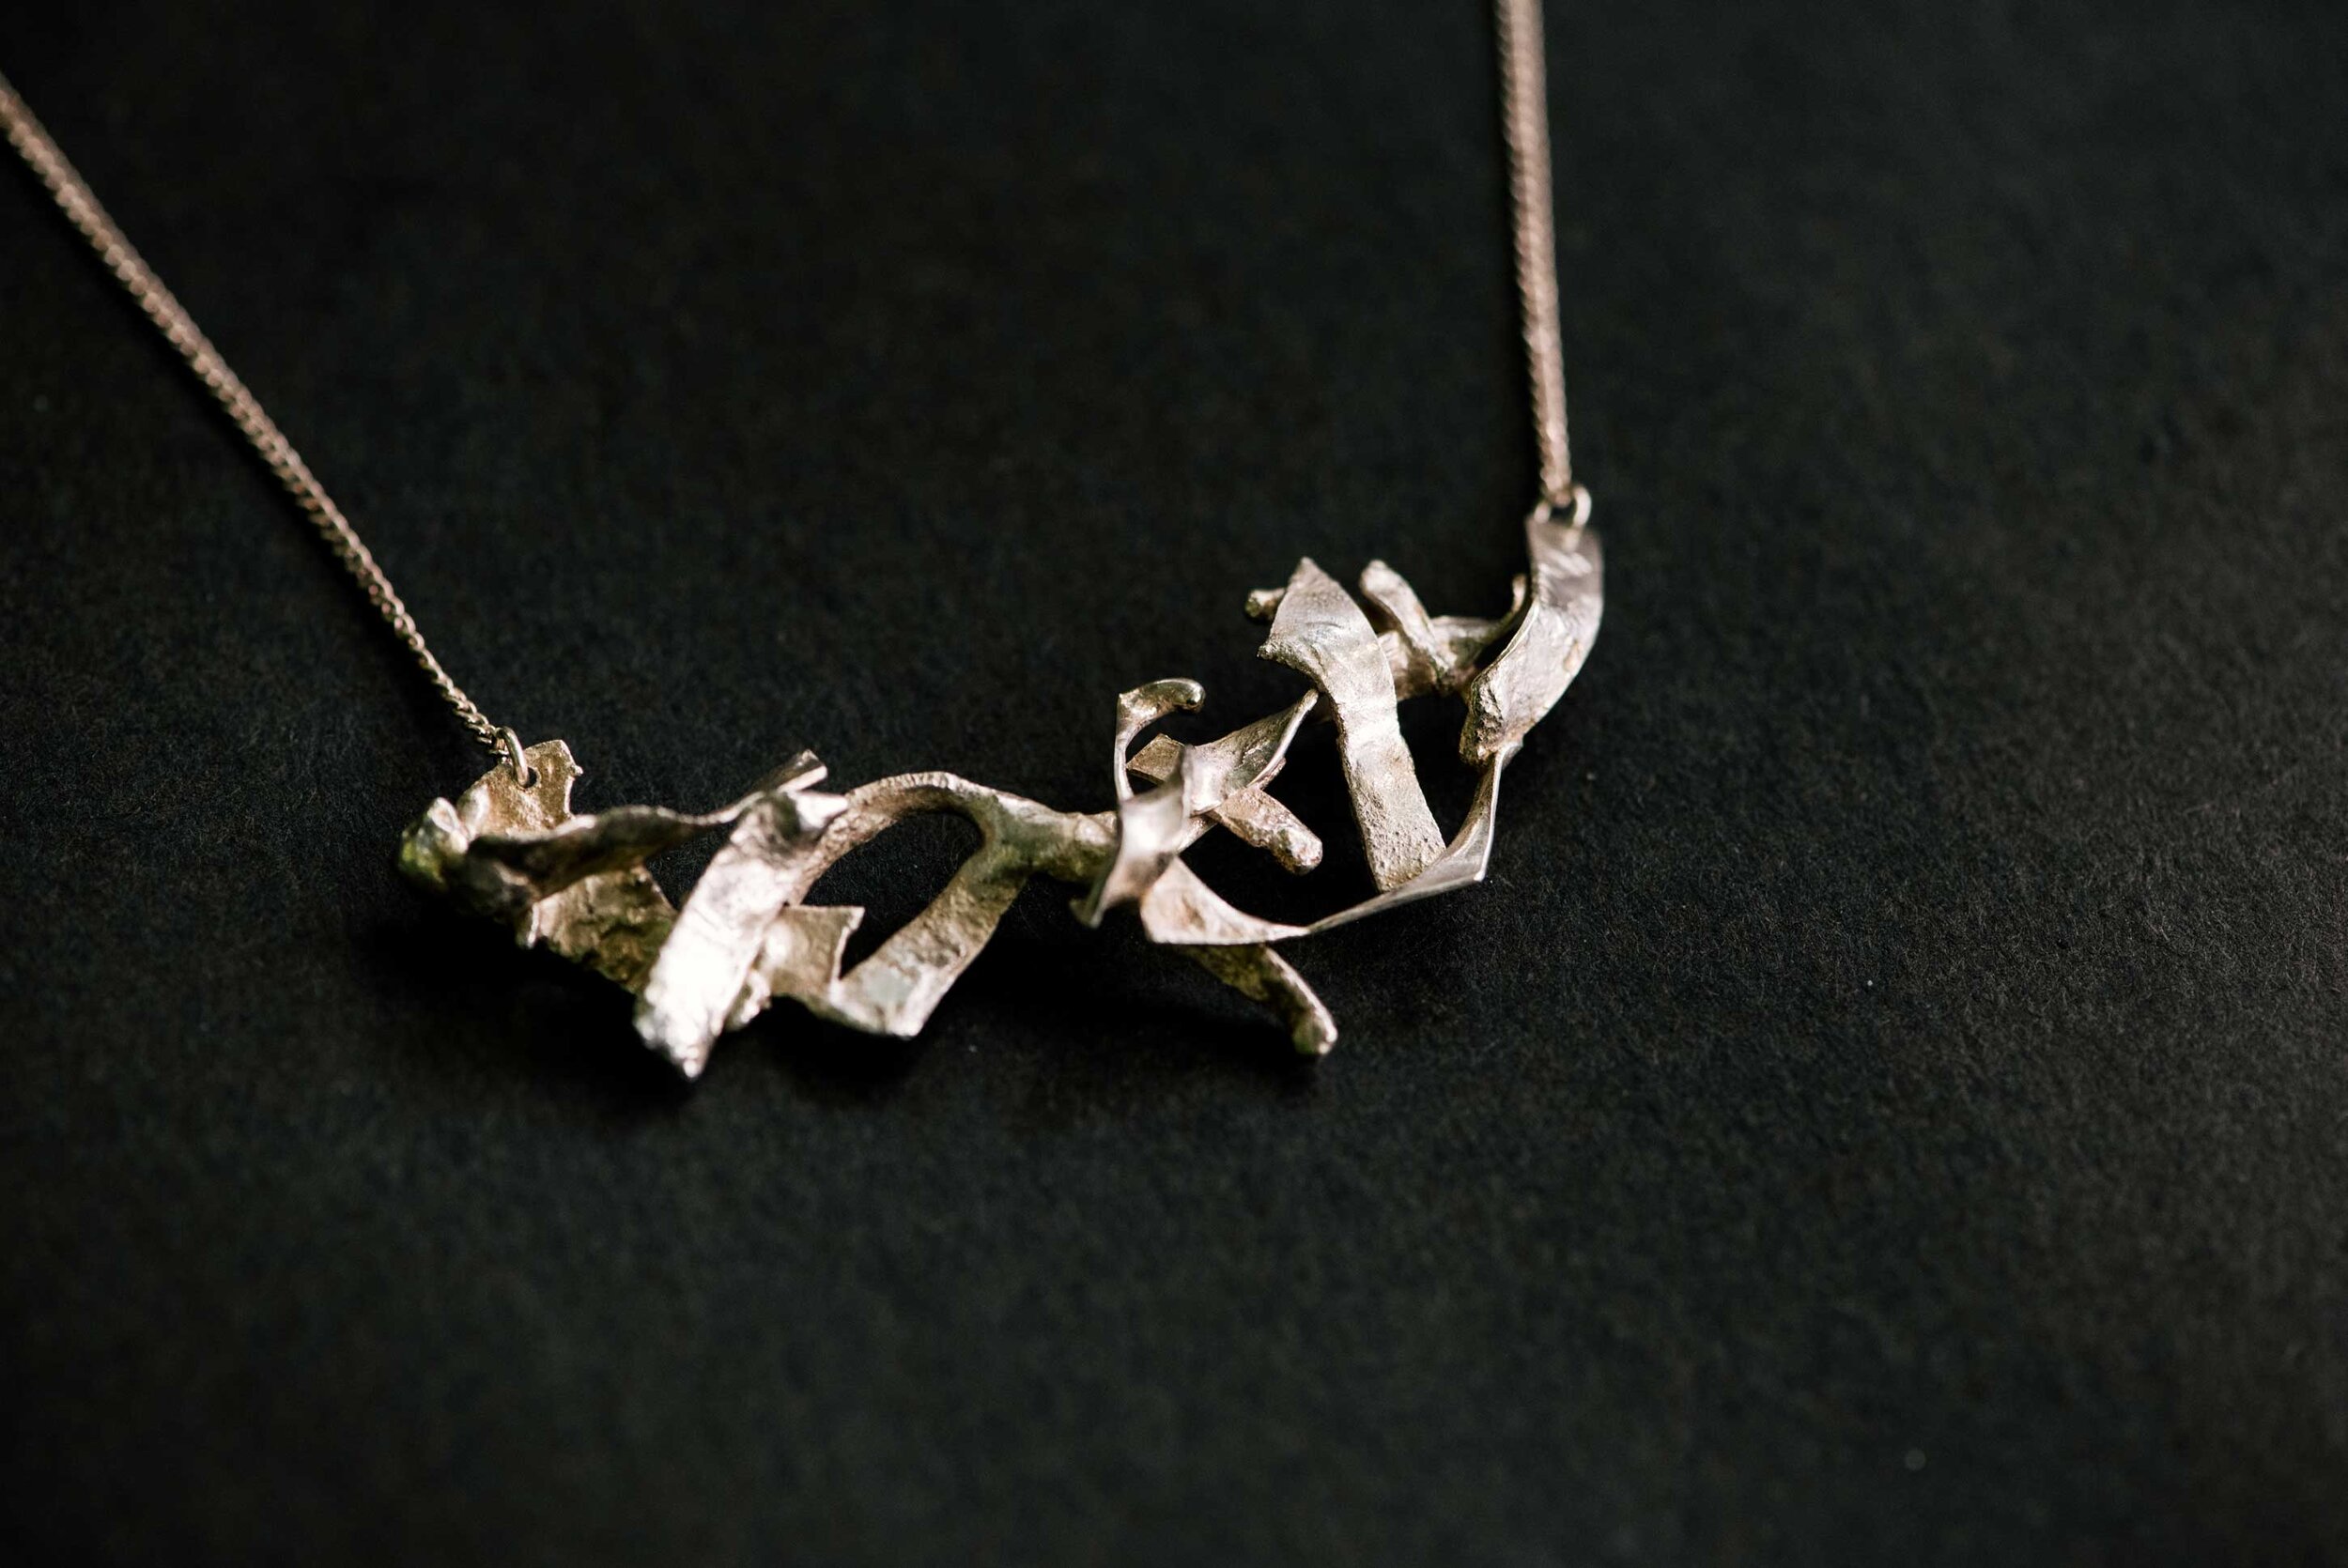  An eccentric pendant accentuates the metal’s organicism. 